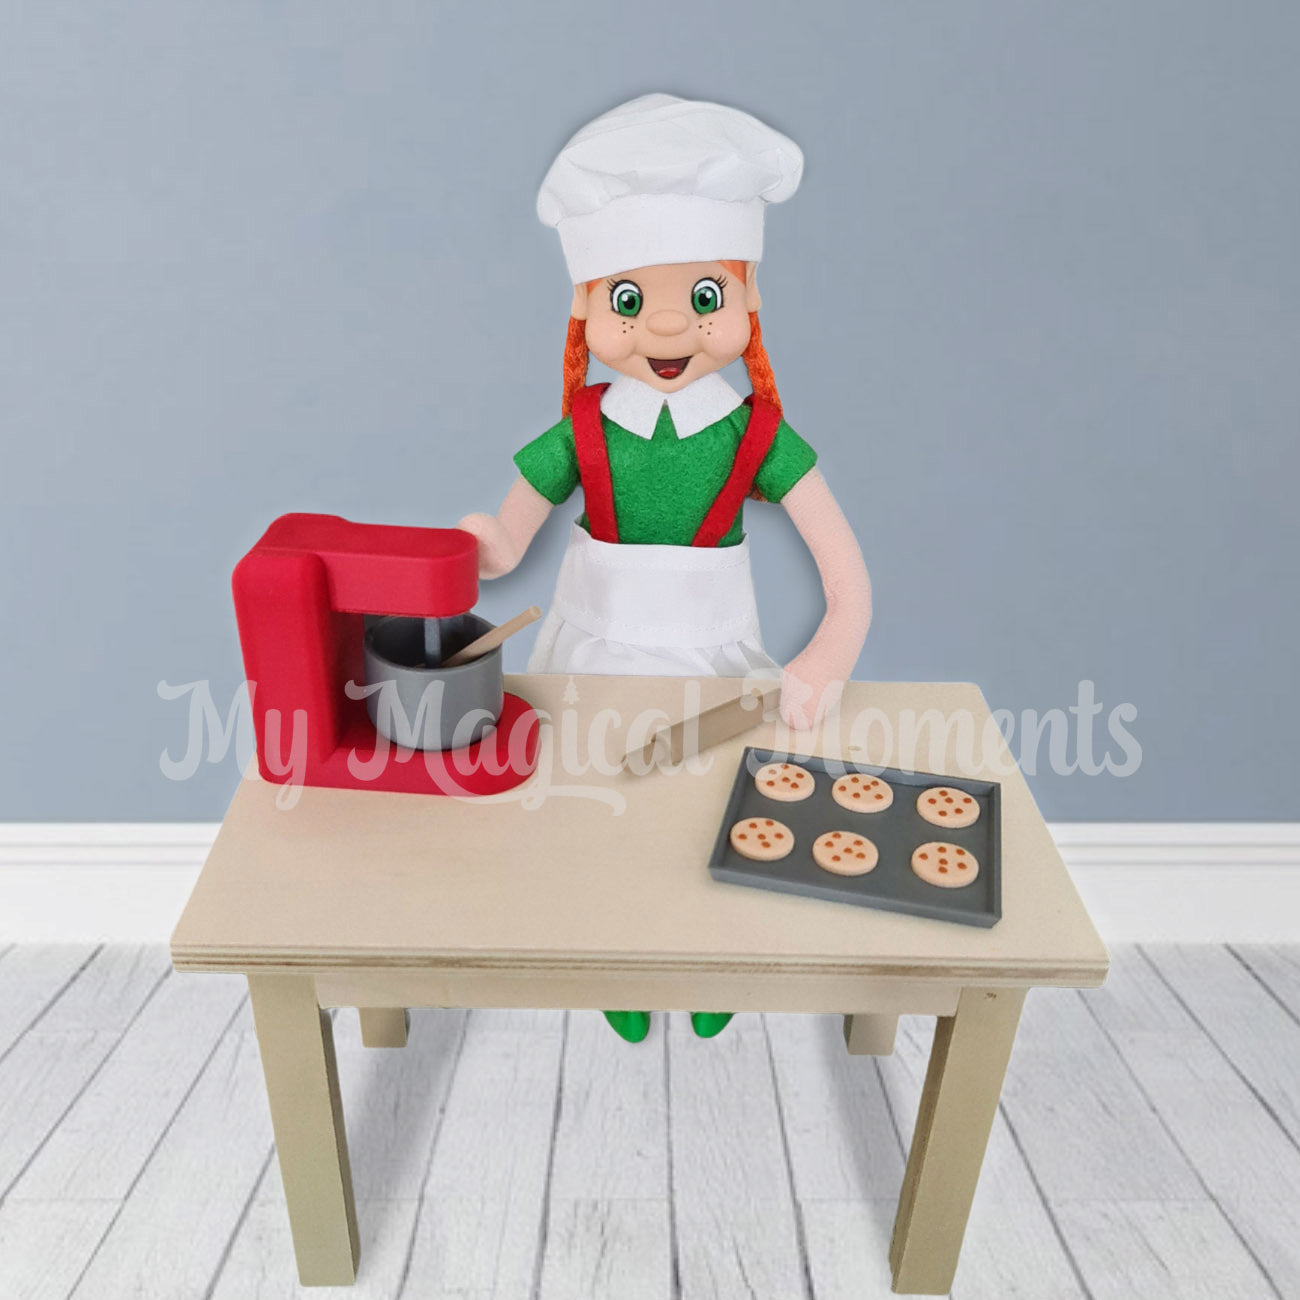 Elf making cookies with mini baking set